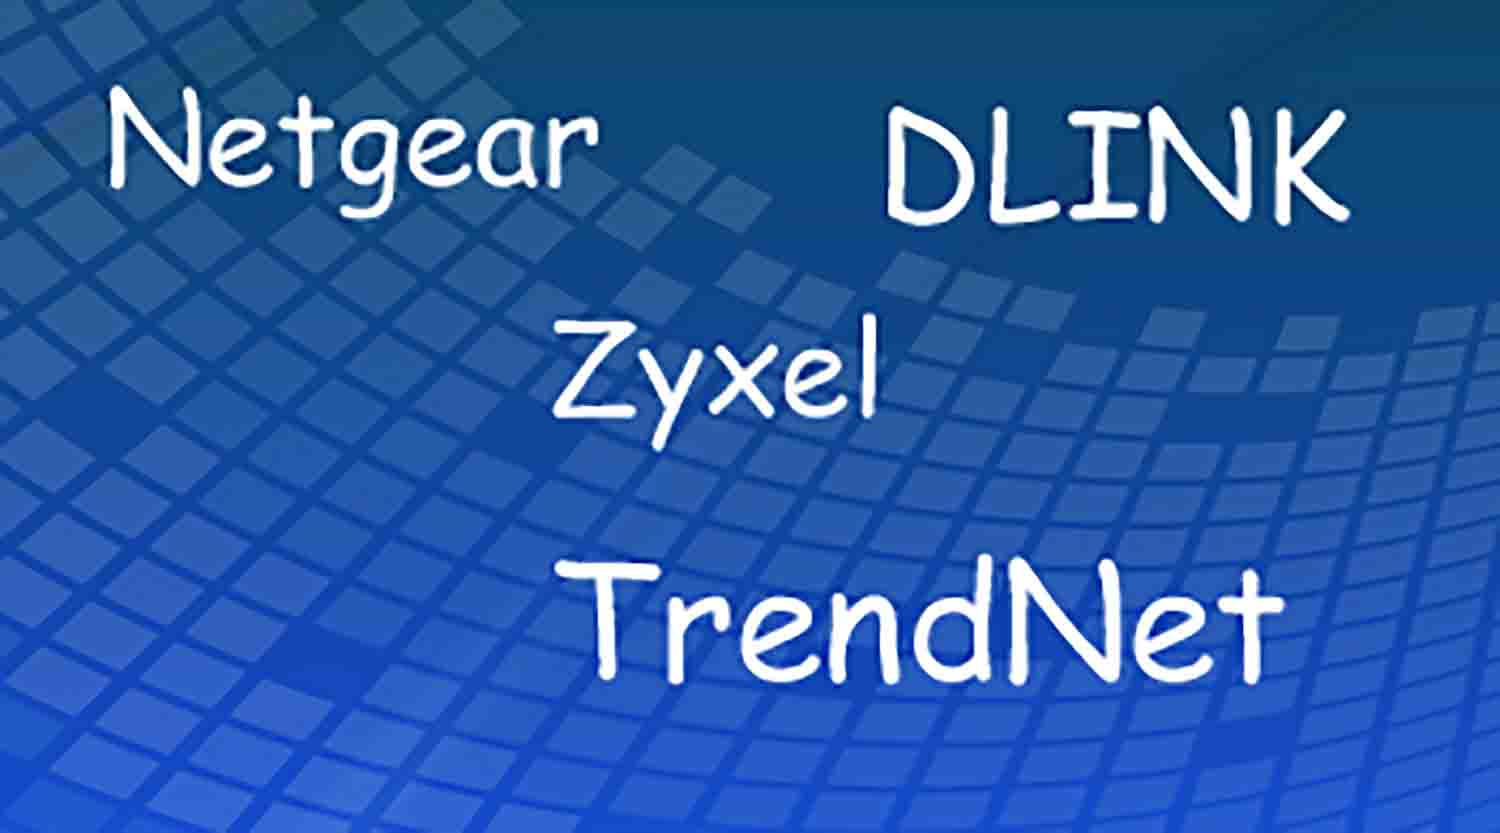 Техподдержка Netgear, Dlink, TrendNet и Zyxel